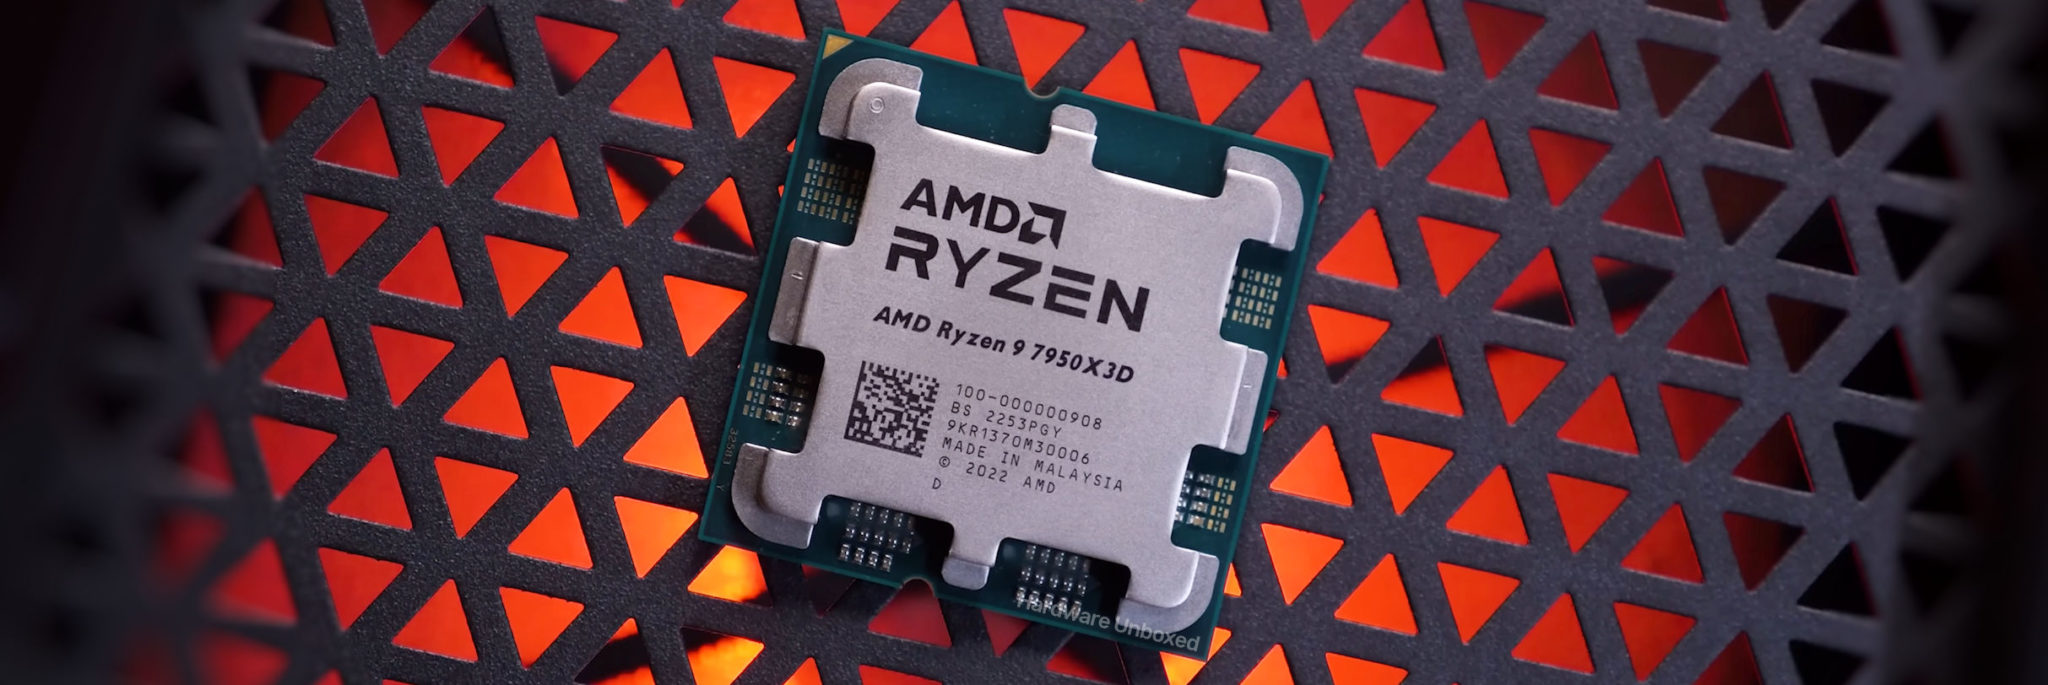 AMD-RYZEN-7950X3D-HERO-BANNER-2048x685.jpg